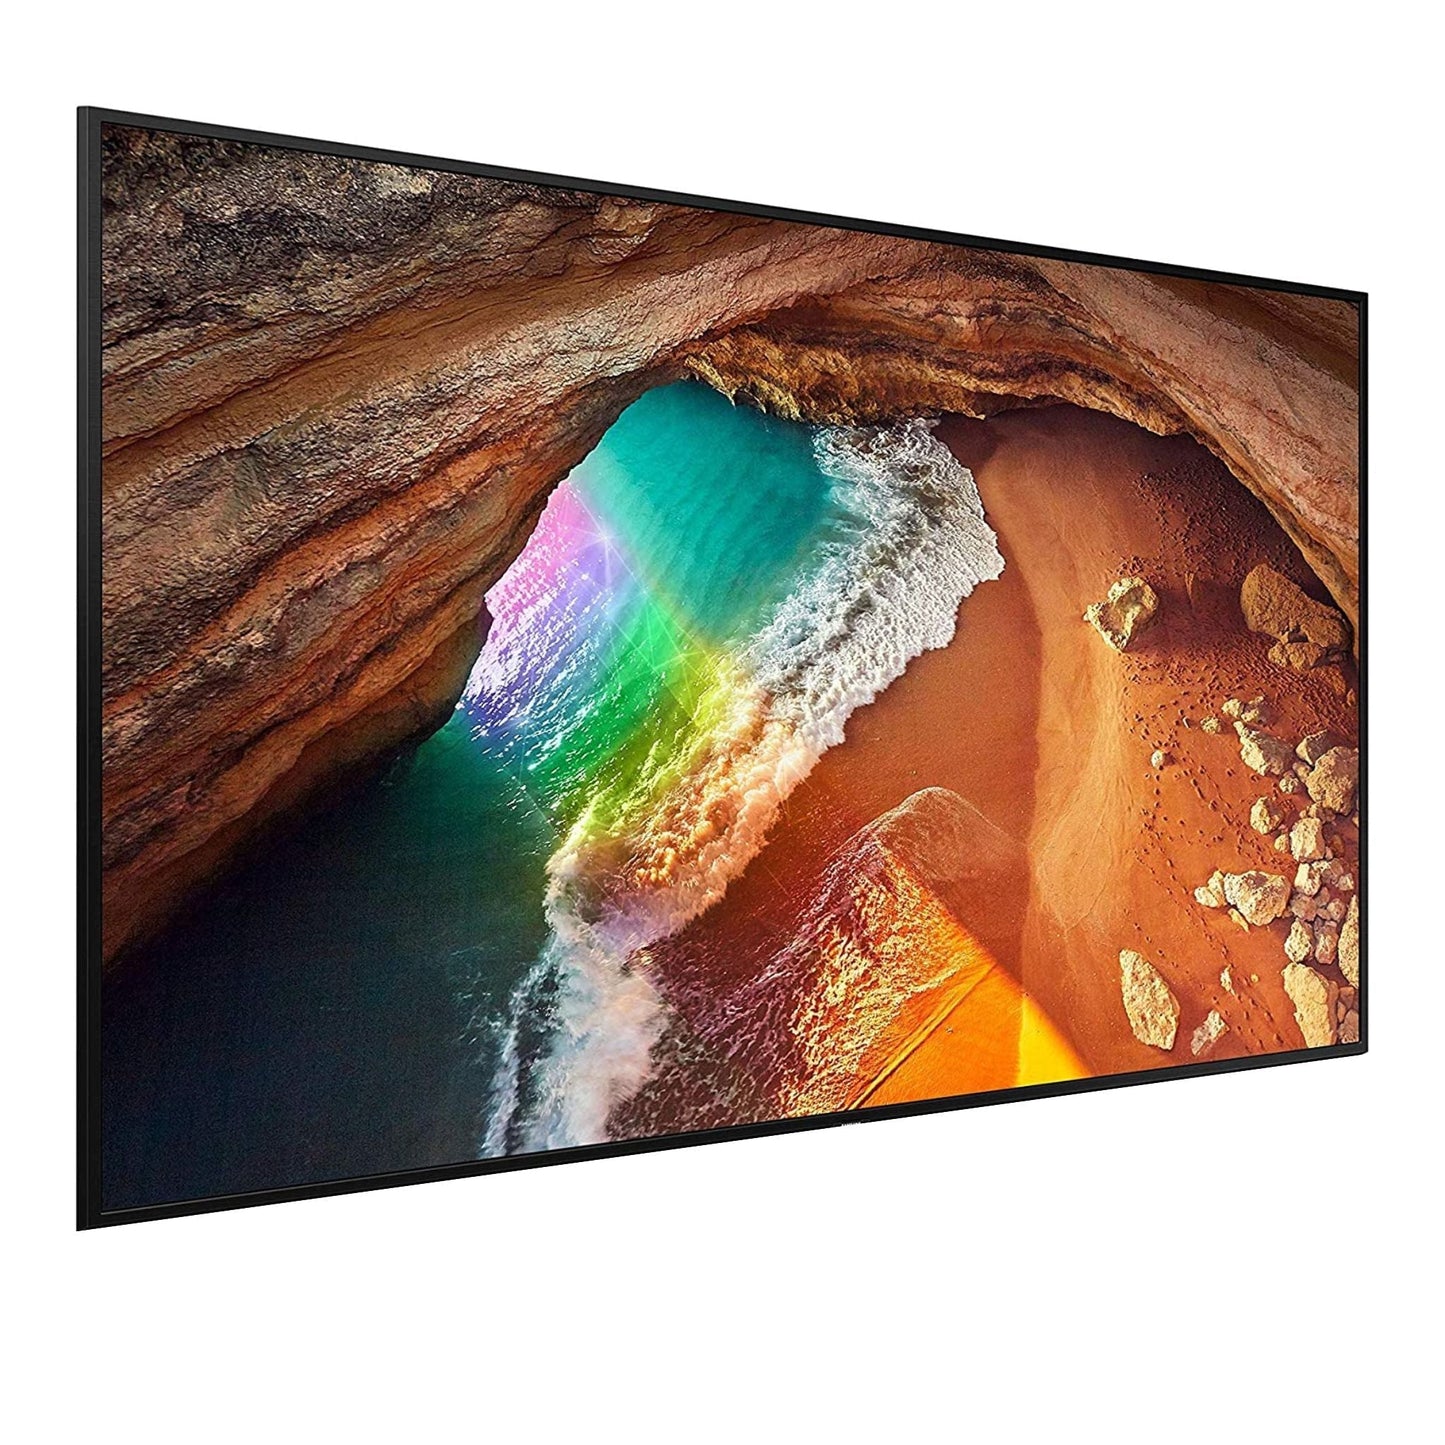 Samsung 82 inch Smart QLED TV, 82Q60R